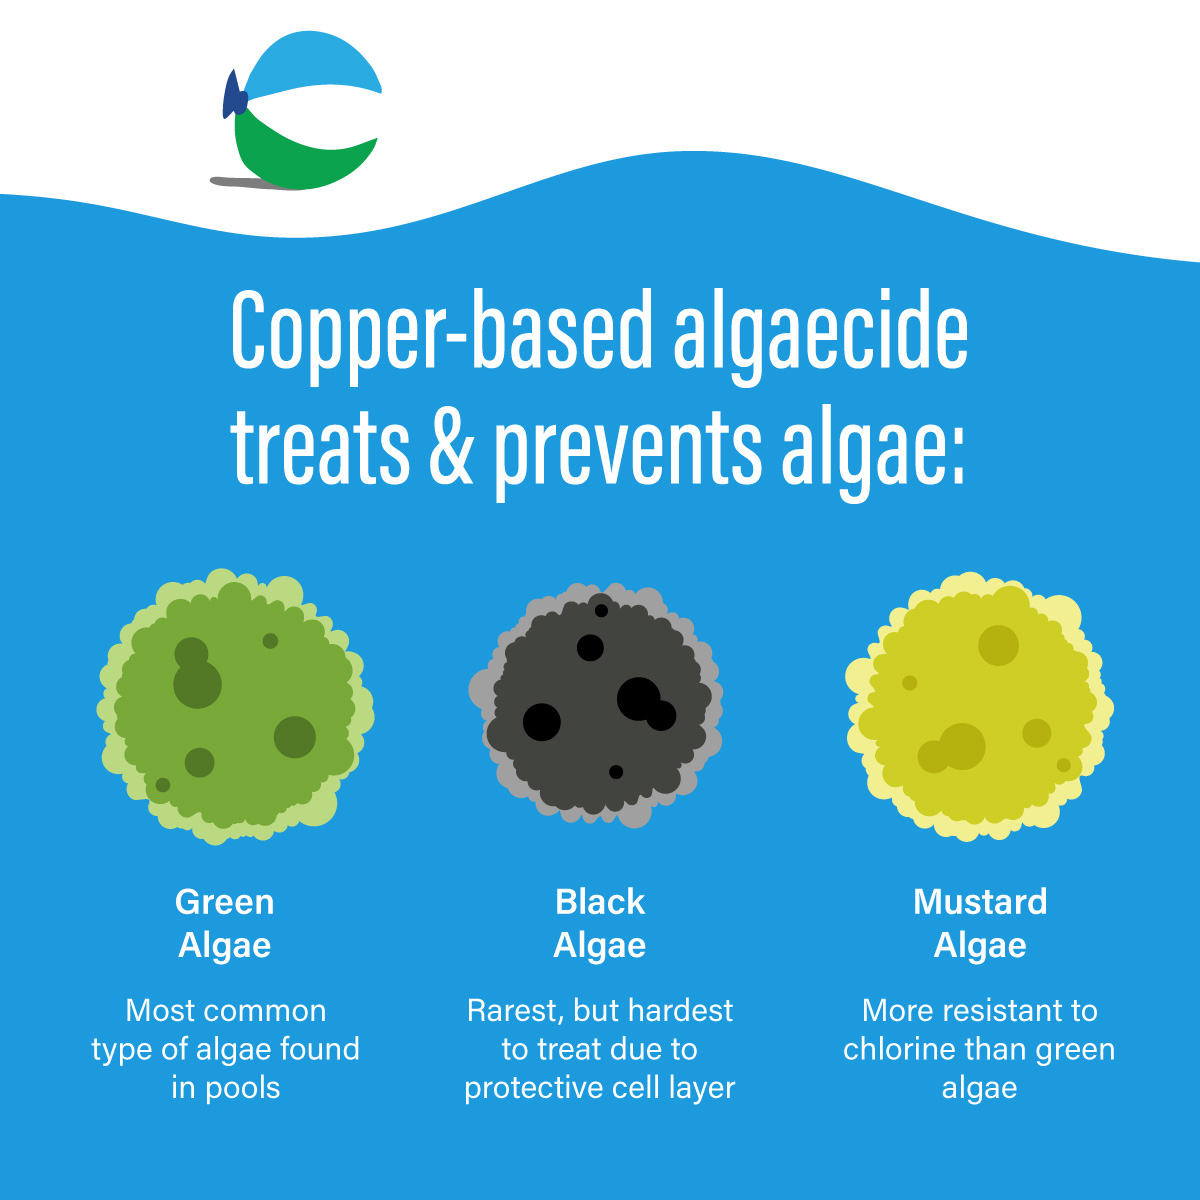 Icons that visually convey algae-free pool water after usage. Icons of Green Algae, Black Algae, and Mustard Algae